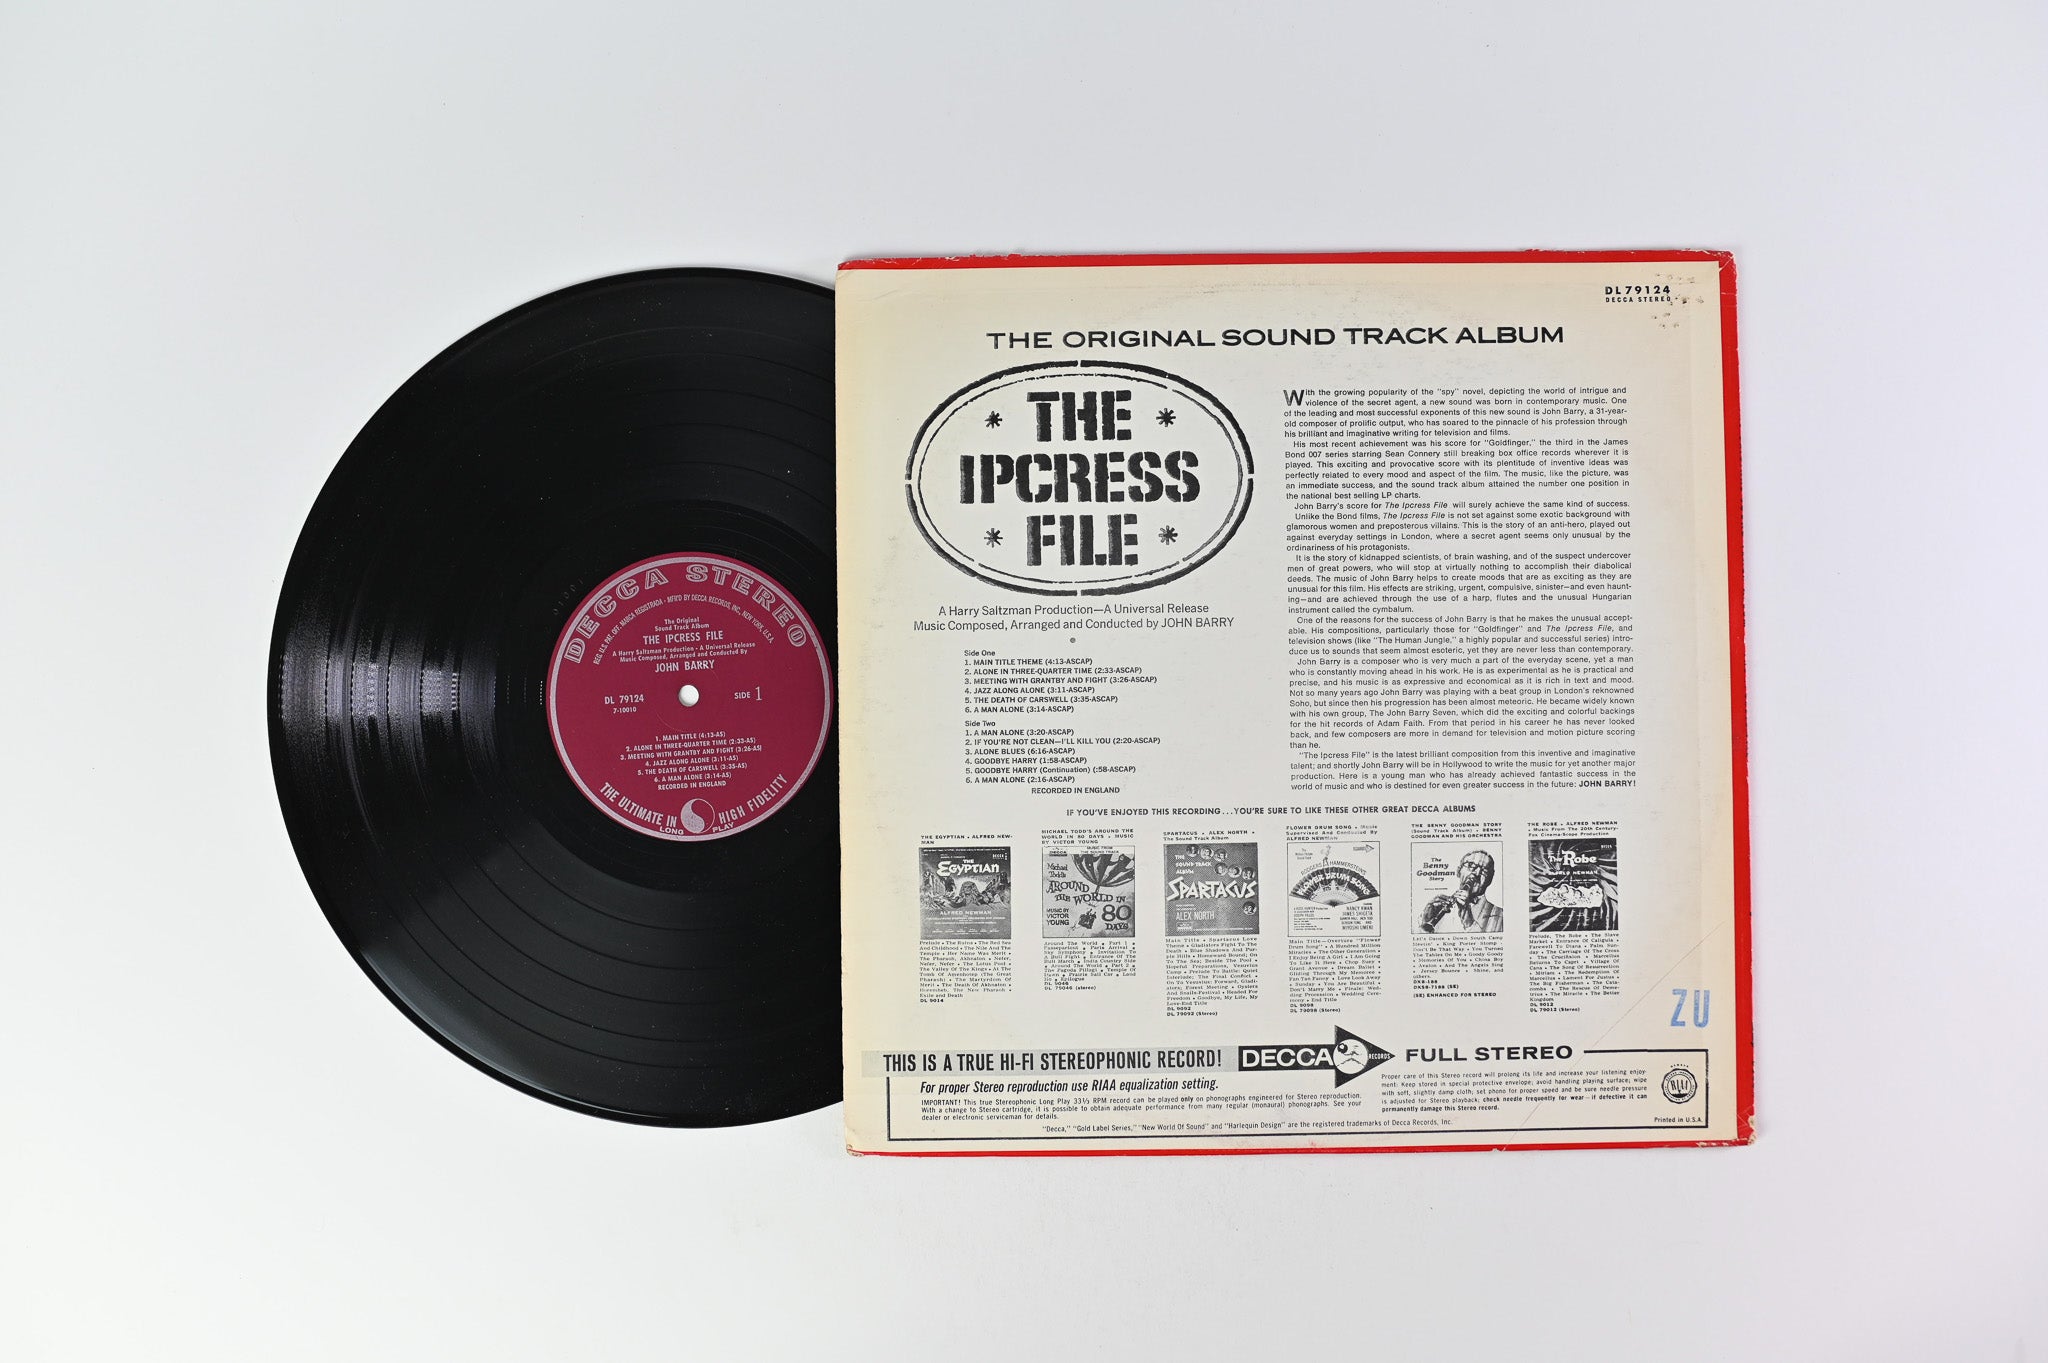 John Barry - The Ipcress File (The Original Soundtrack Album) on Decca